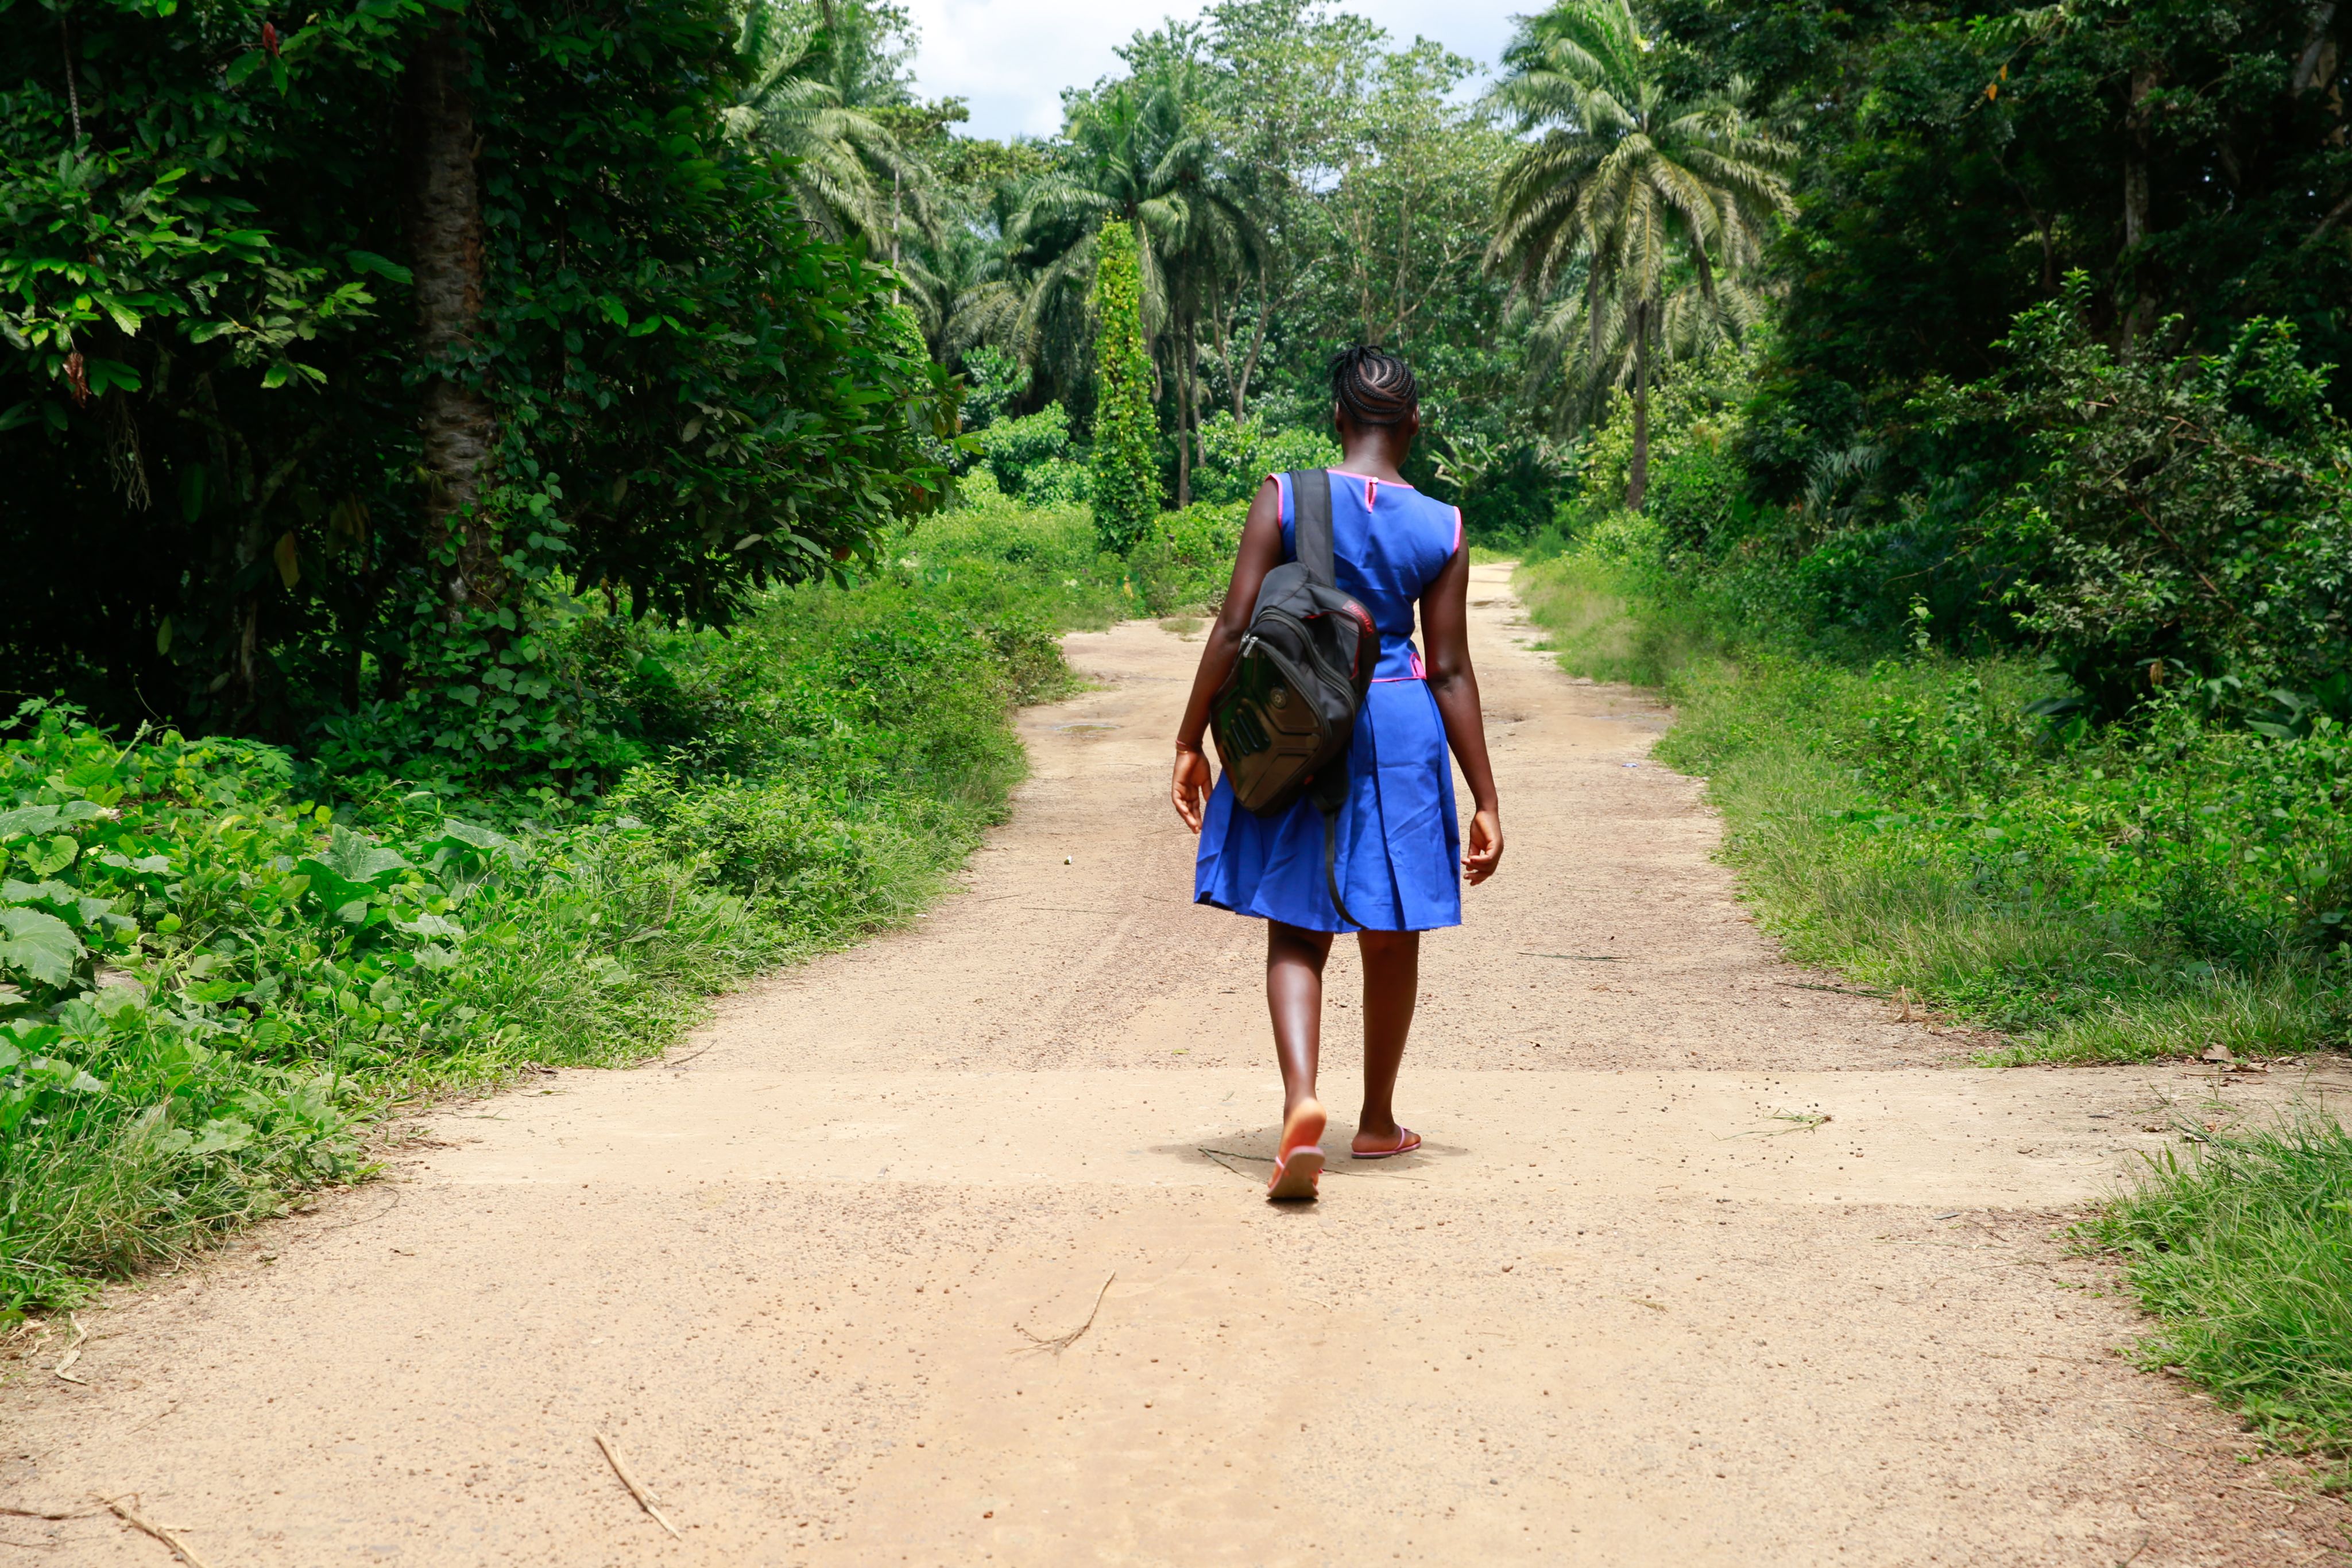 Kpemeh*, 18, walks to school in Kailahun, Sierra Leone